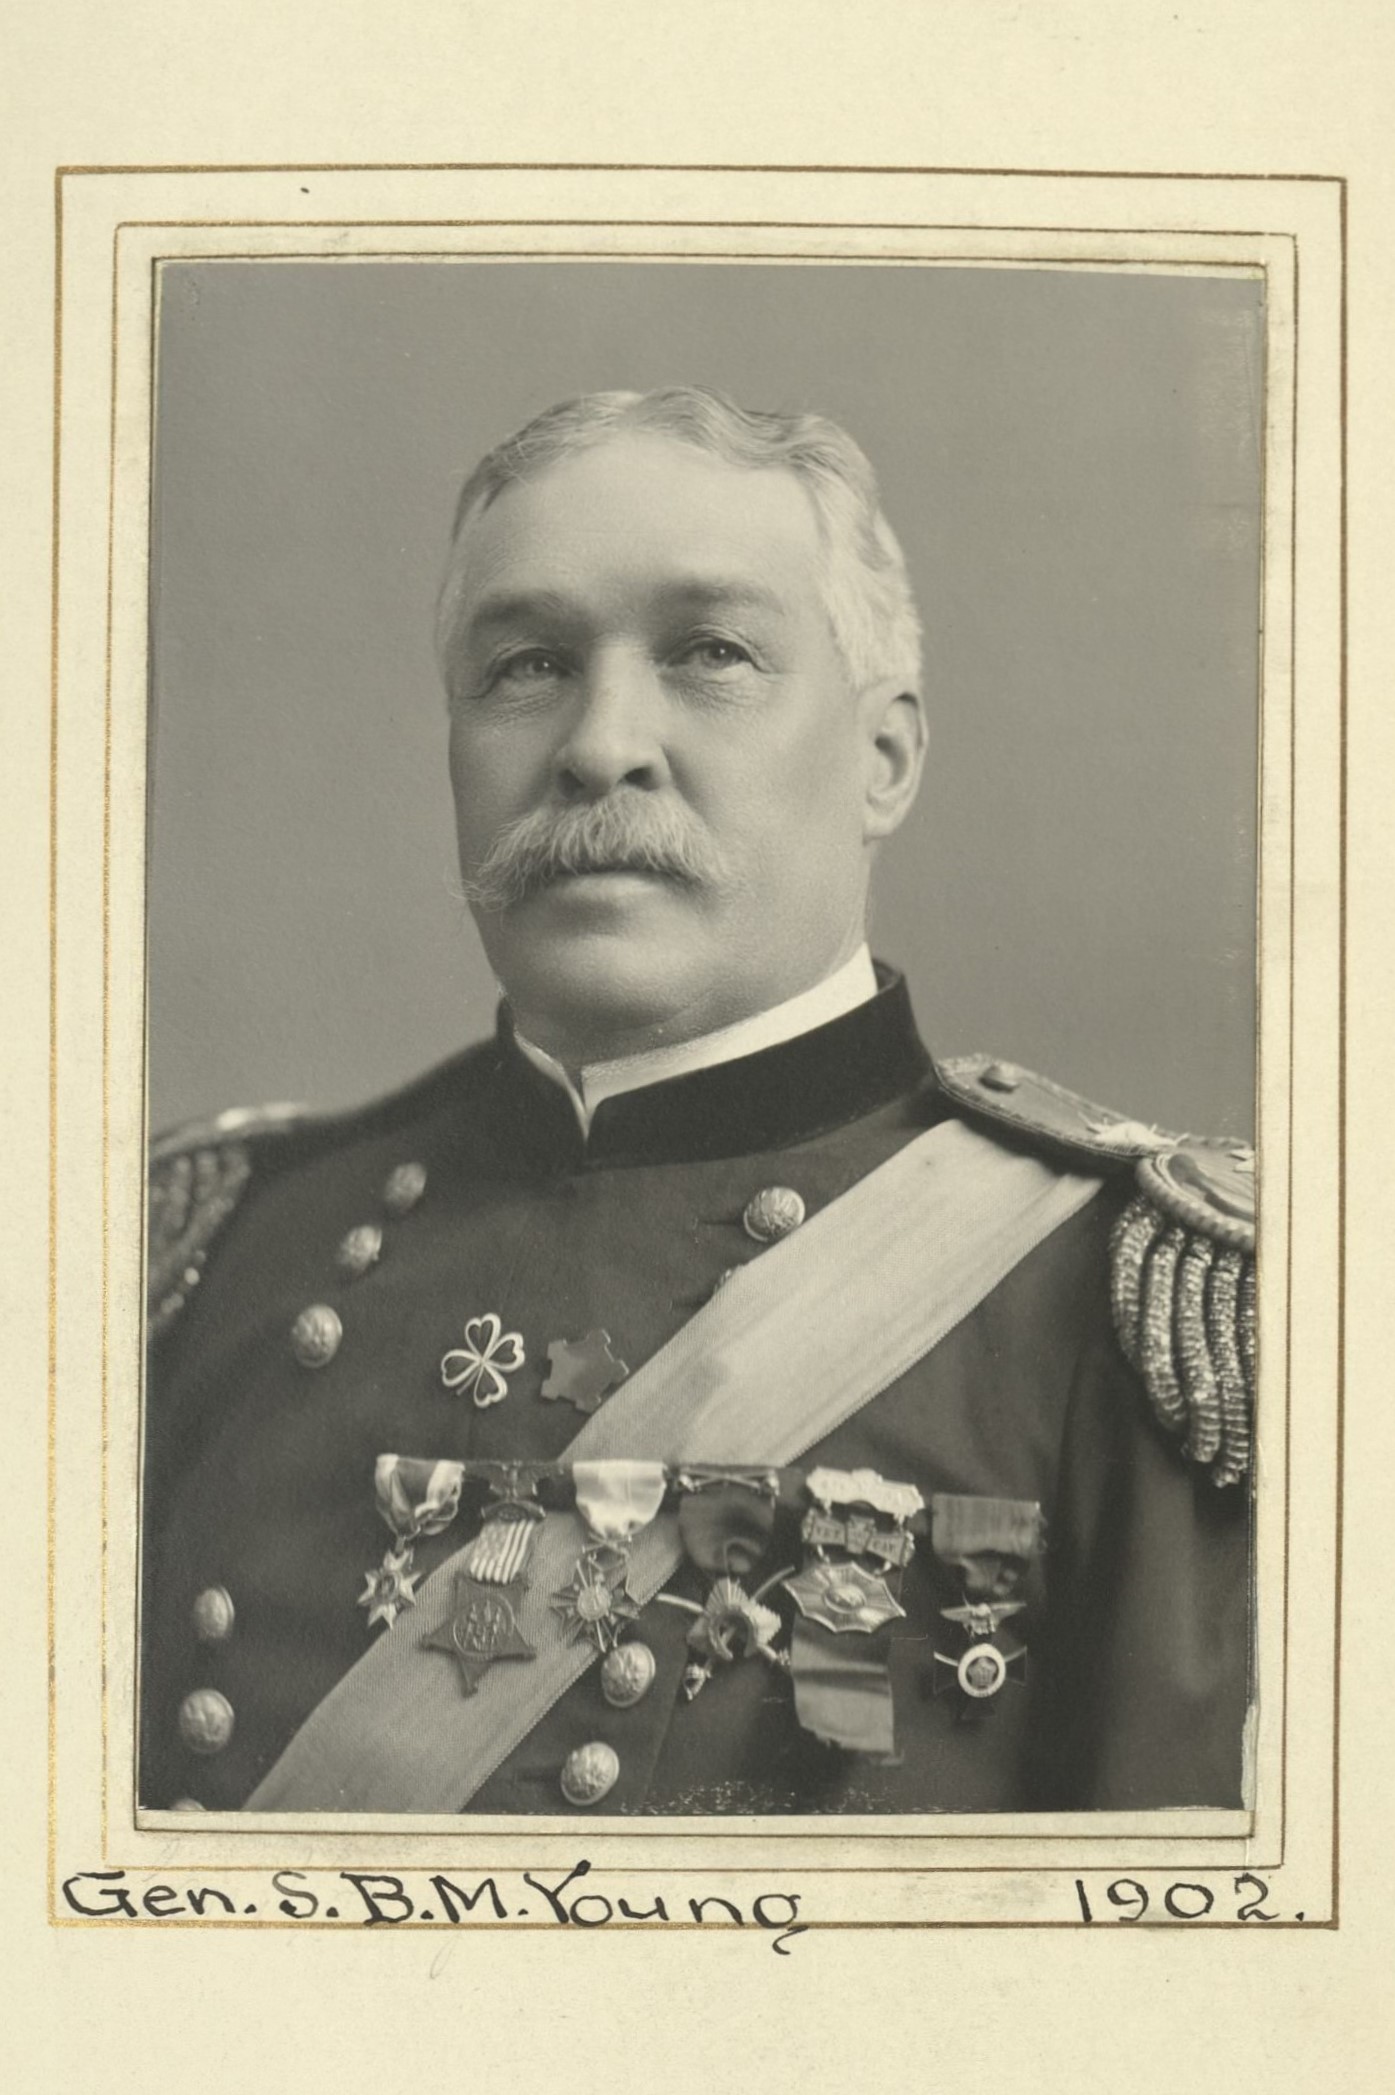 Member portrait of Samuel B. M. Young